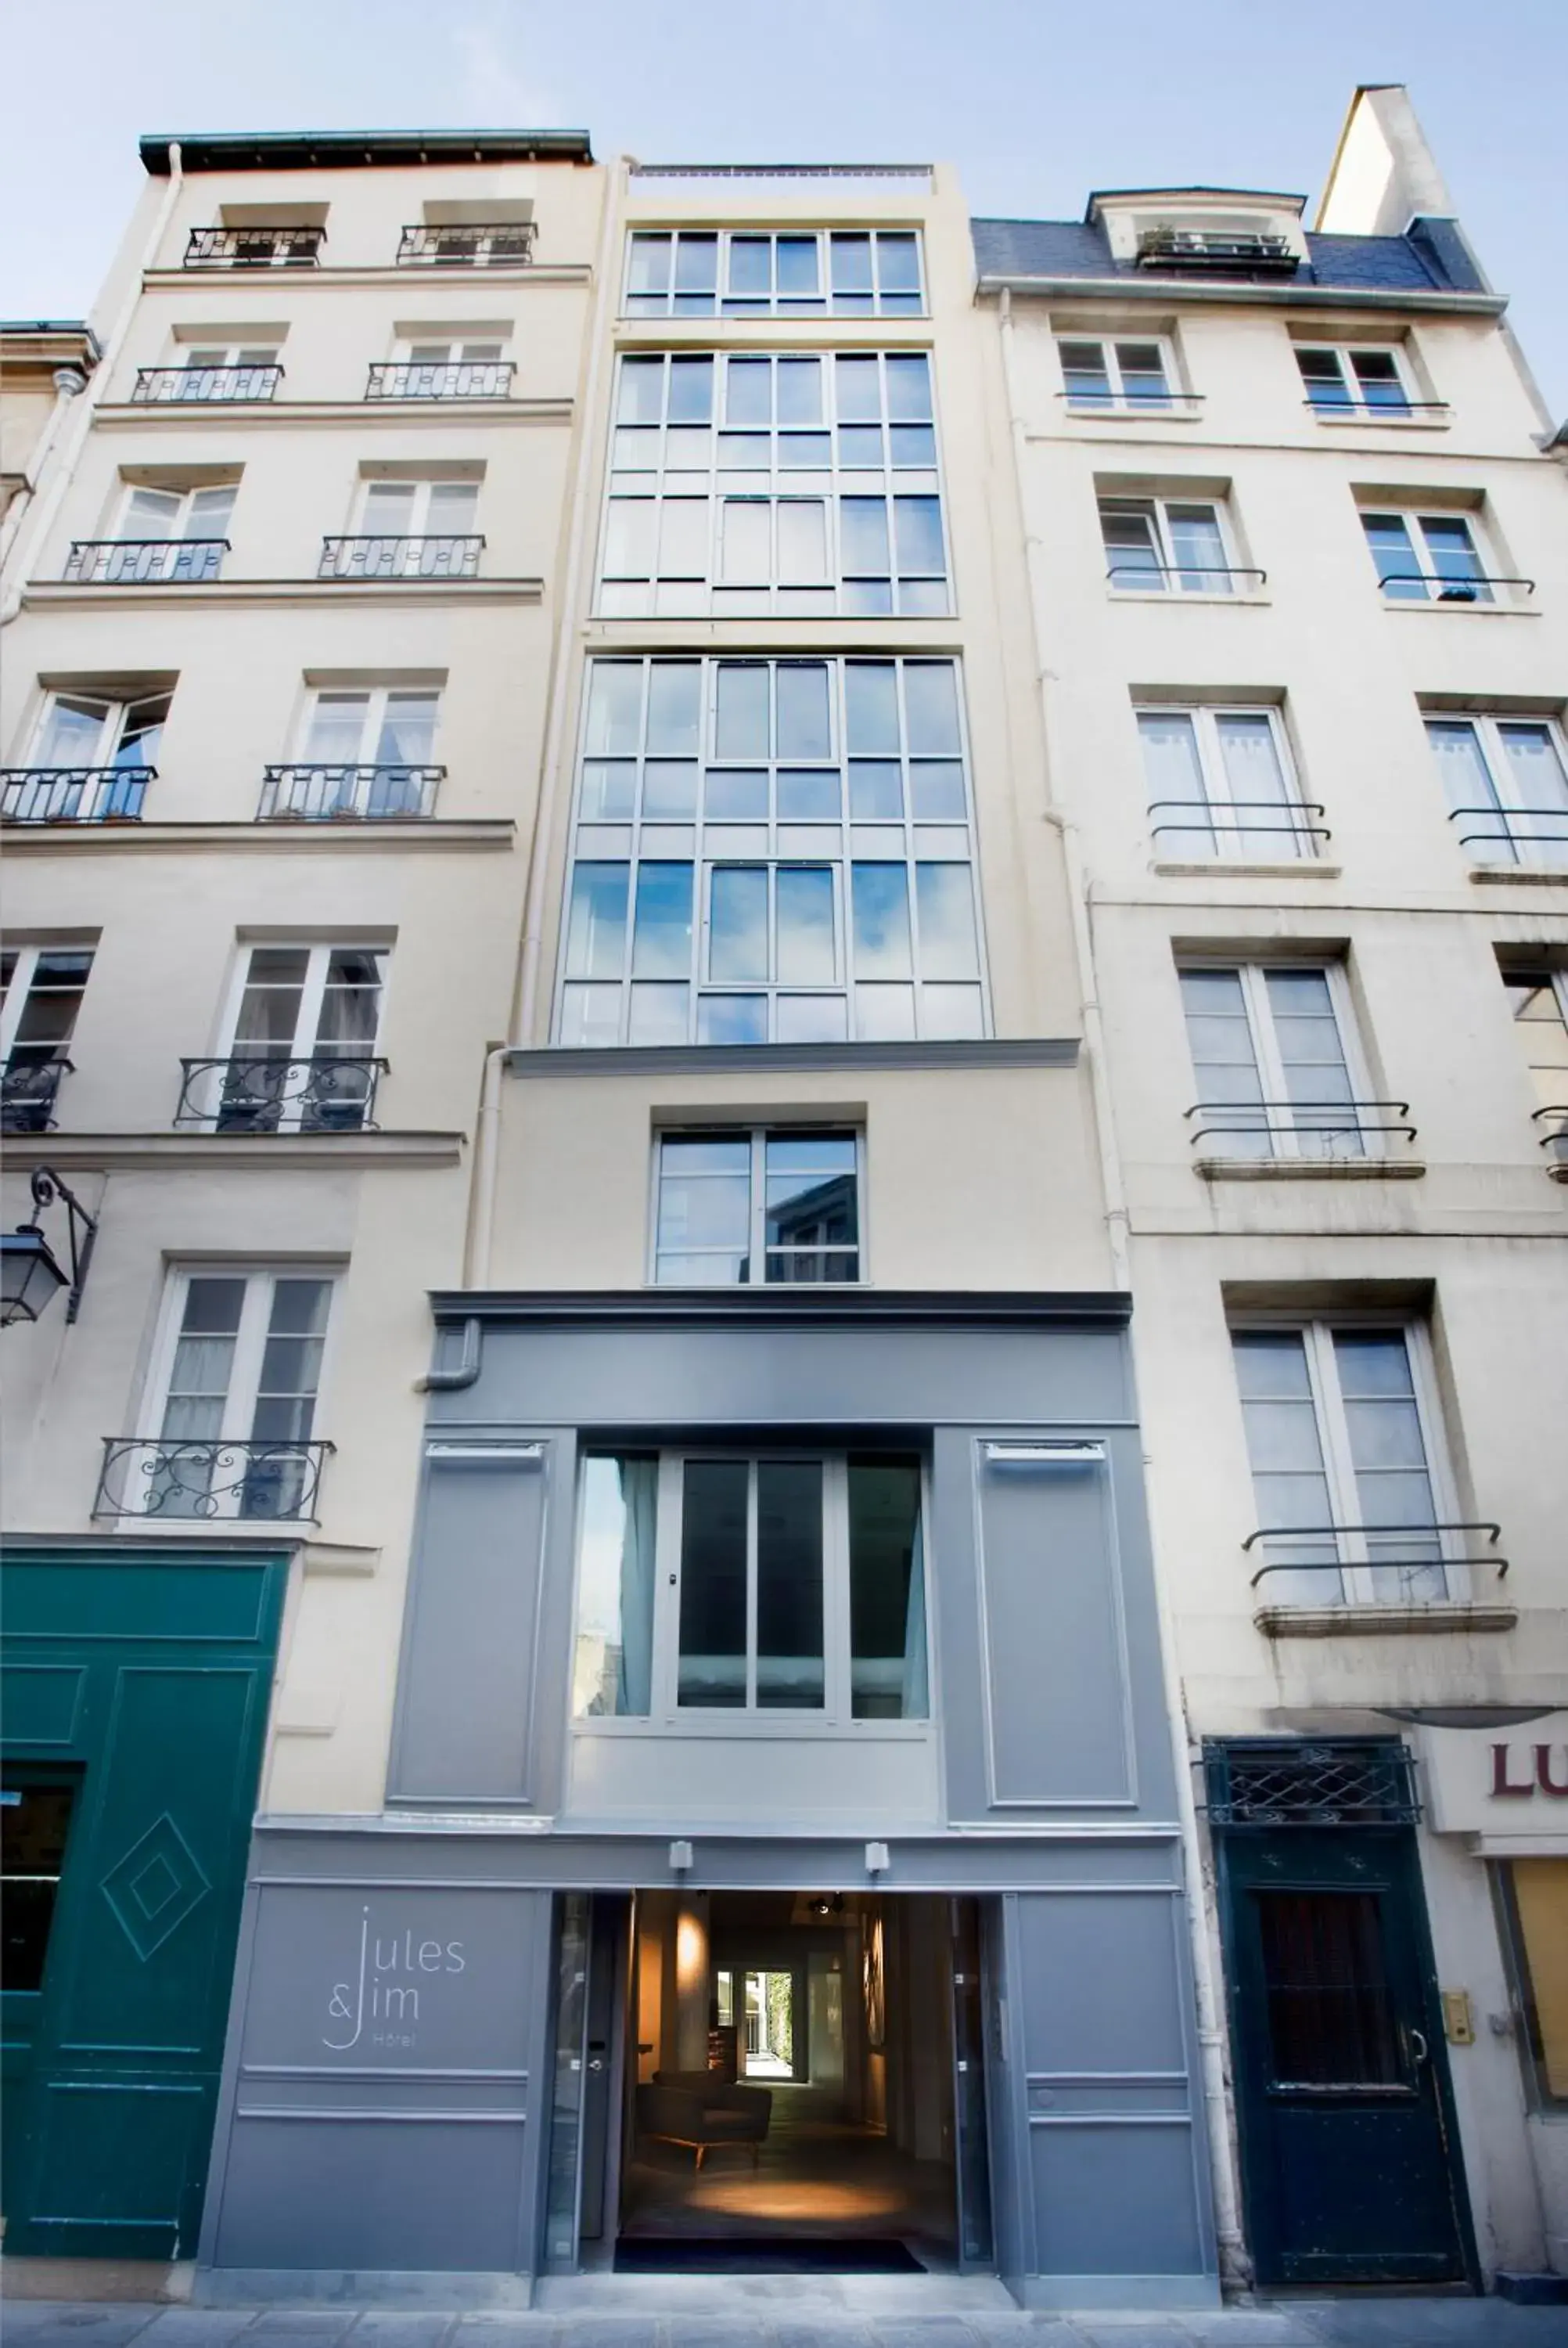 Facade/entrance, Property Building in Hôtel Jules & Jim